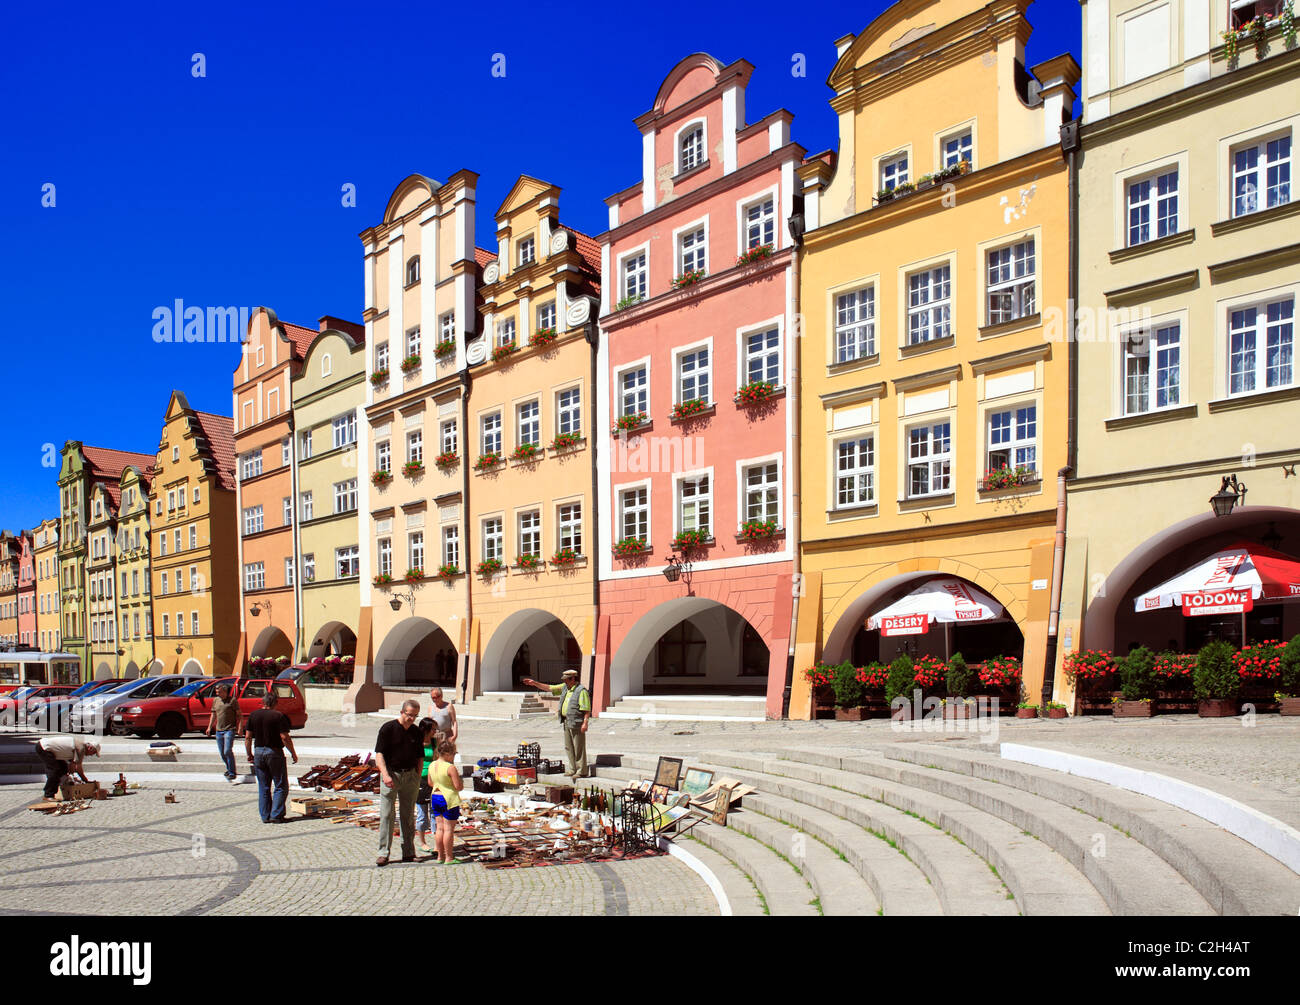 burgher houses facades and arcades in former german city hirschberg, jelenia gora, lower silesia, poland, europe Stock Photo